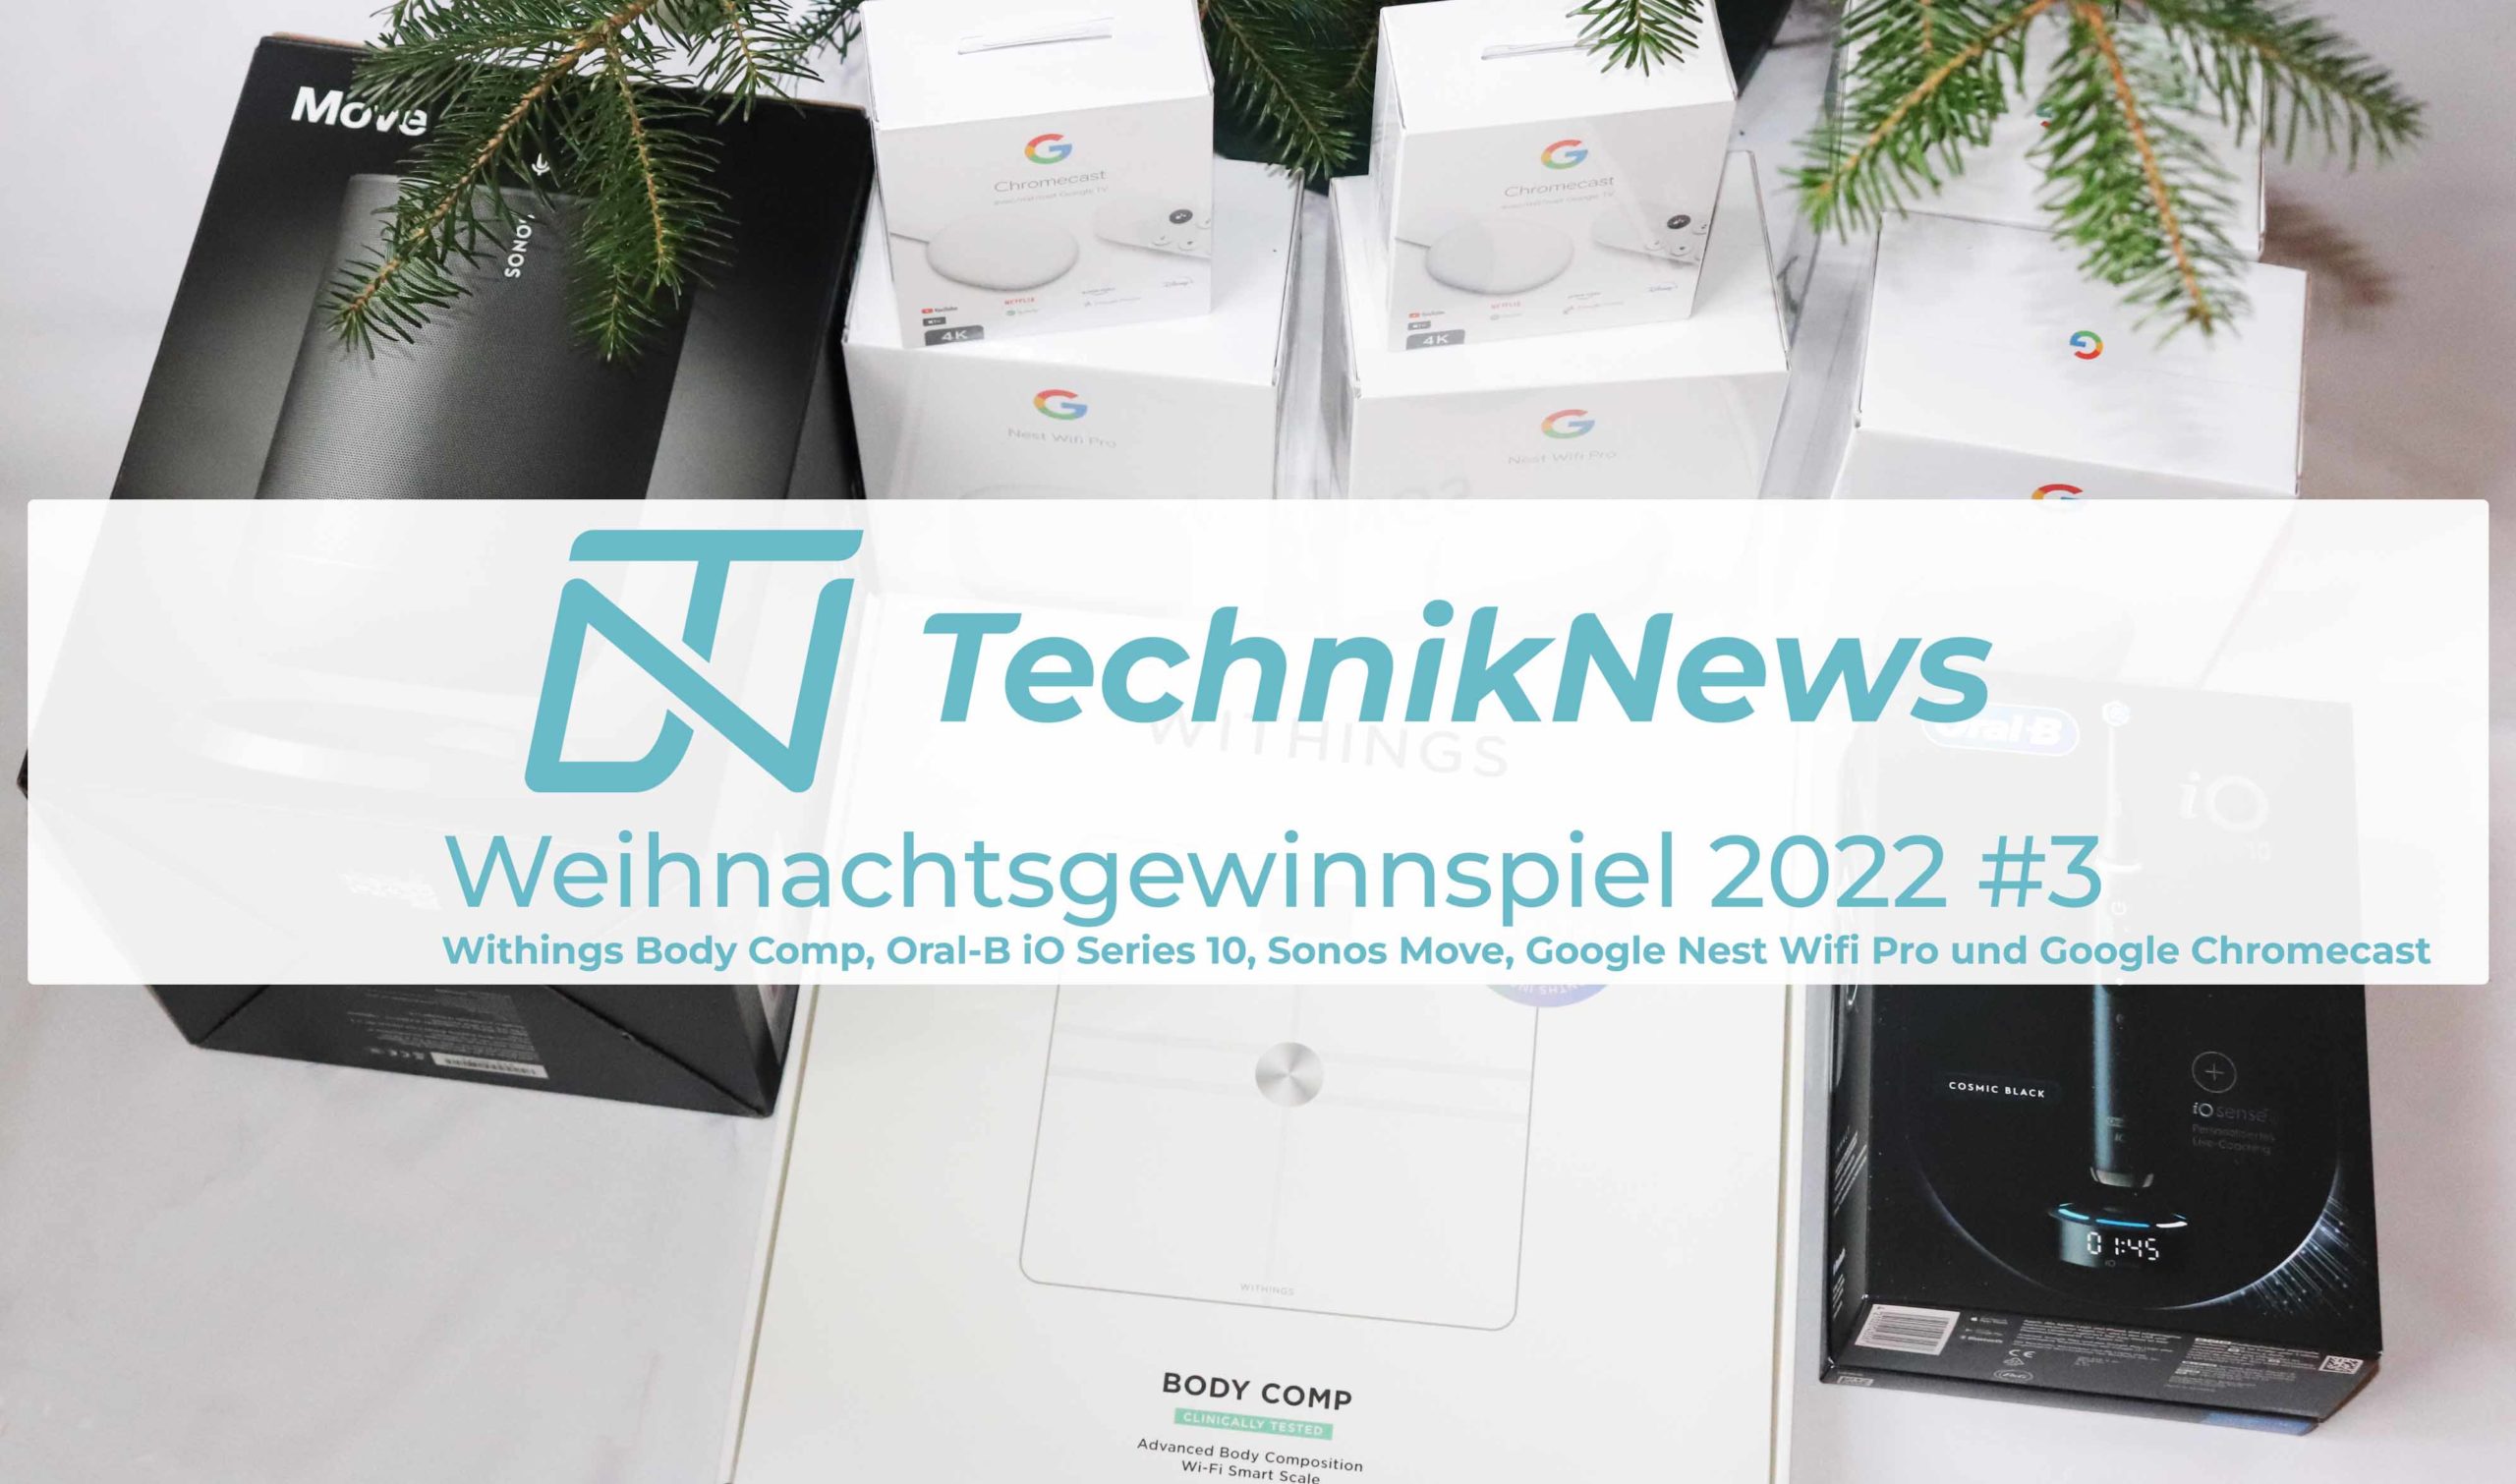 TechnikNews Christmas competition 2022 #3